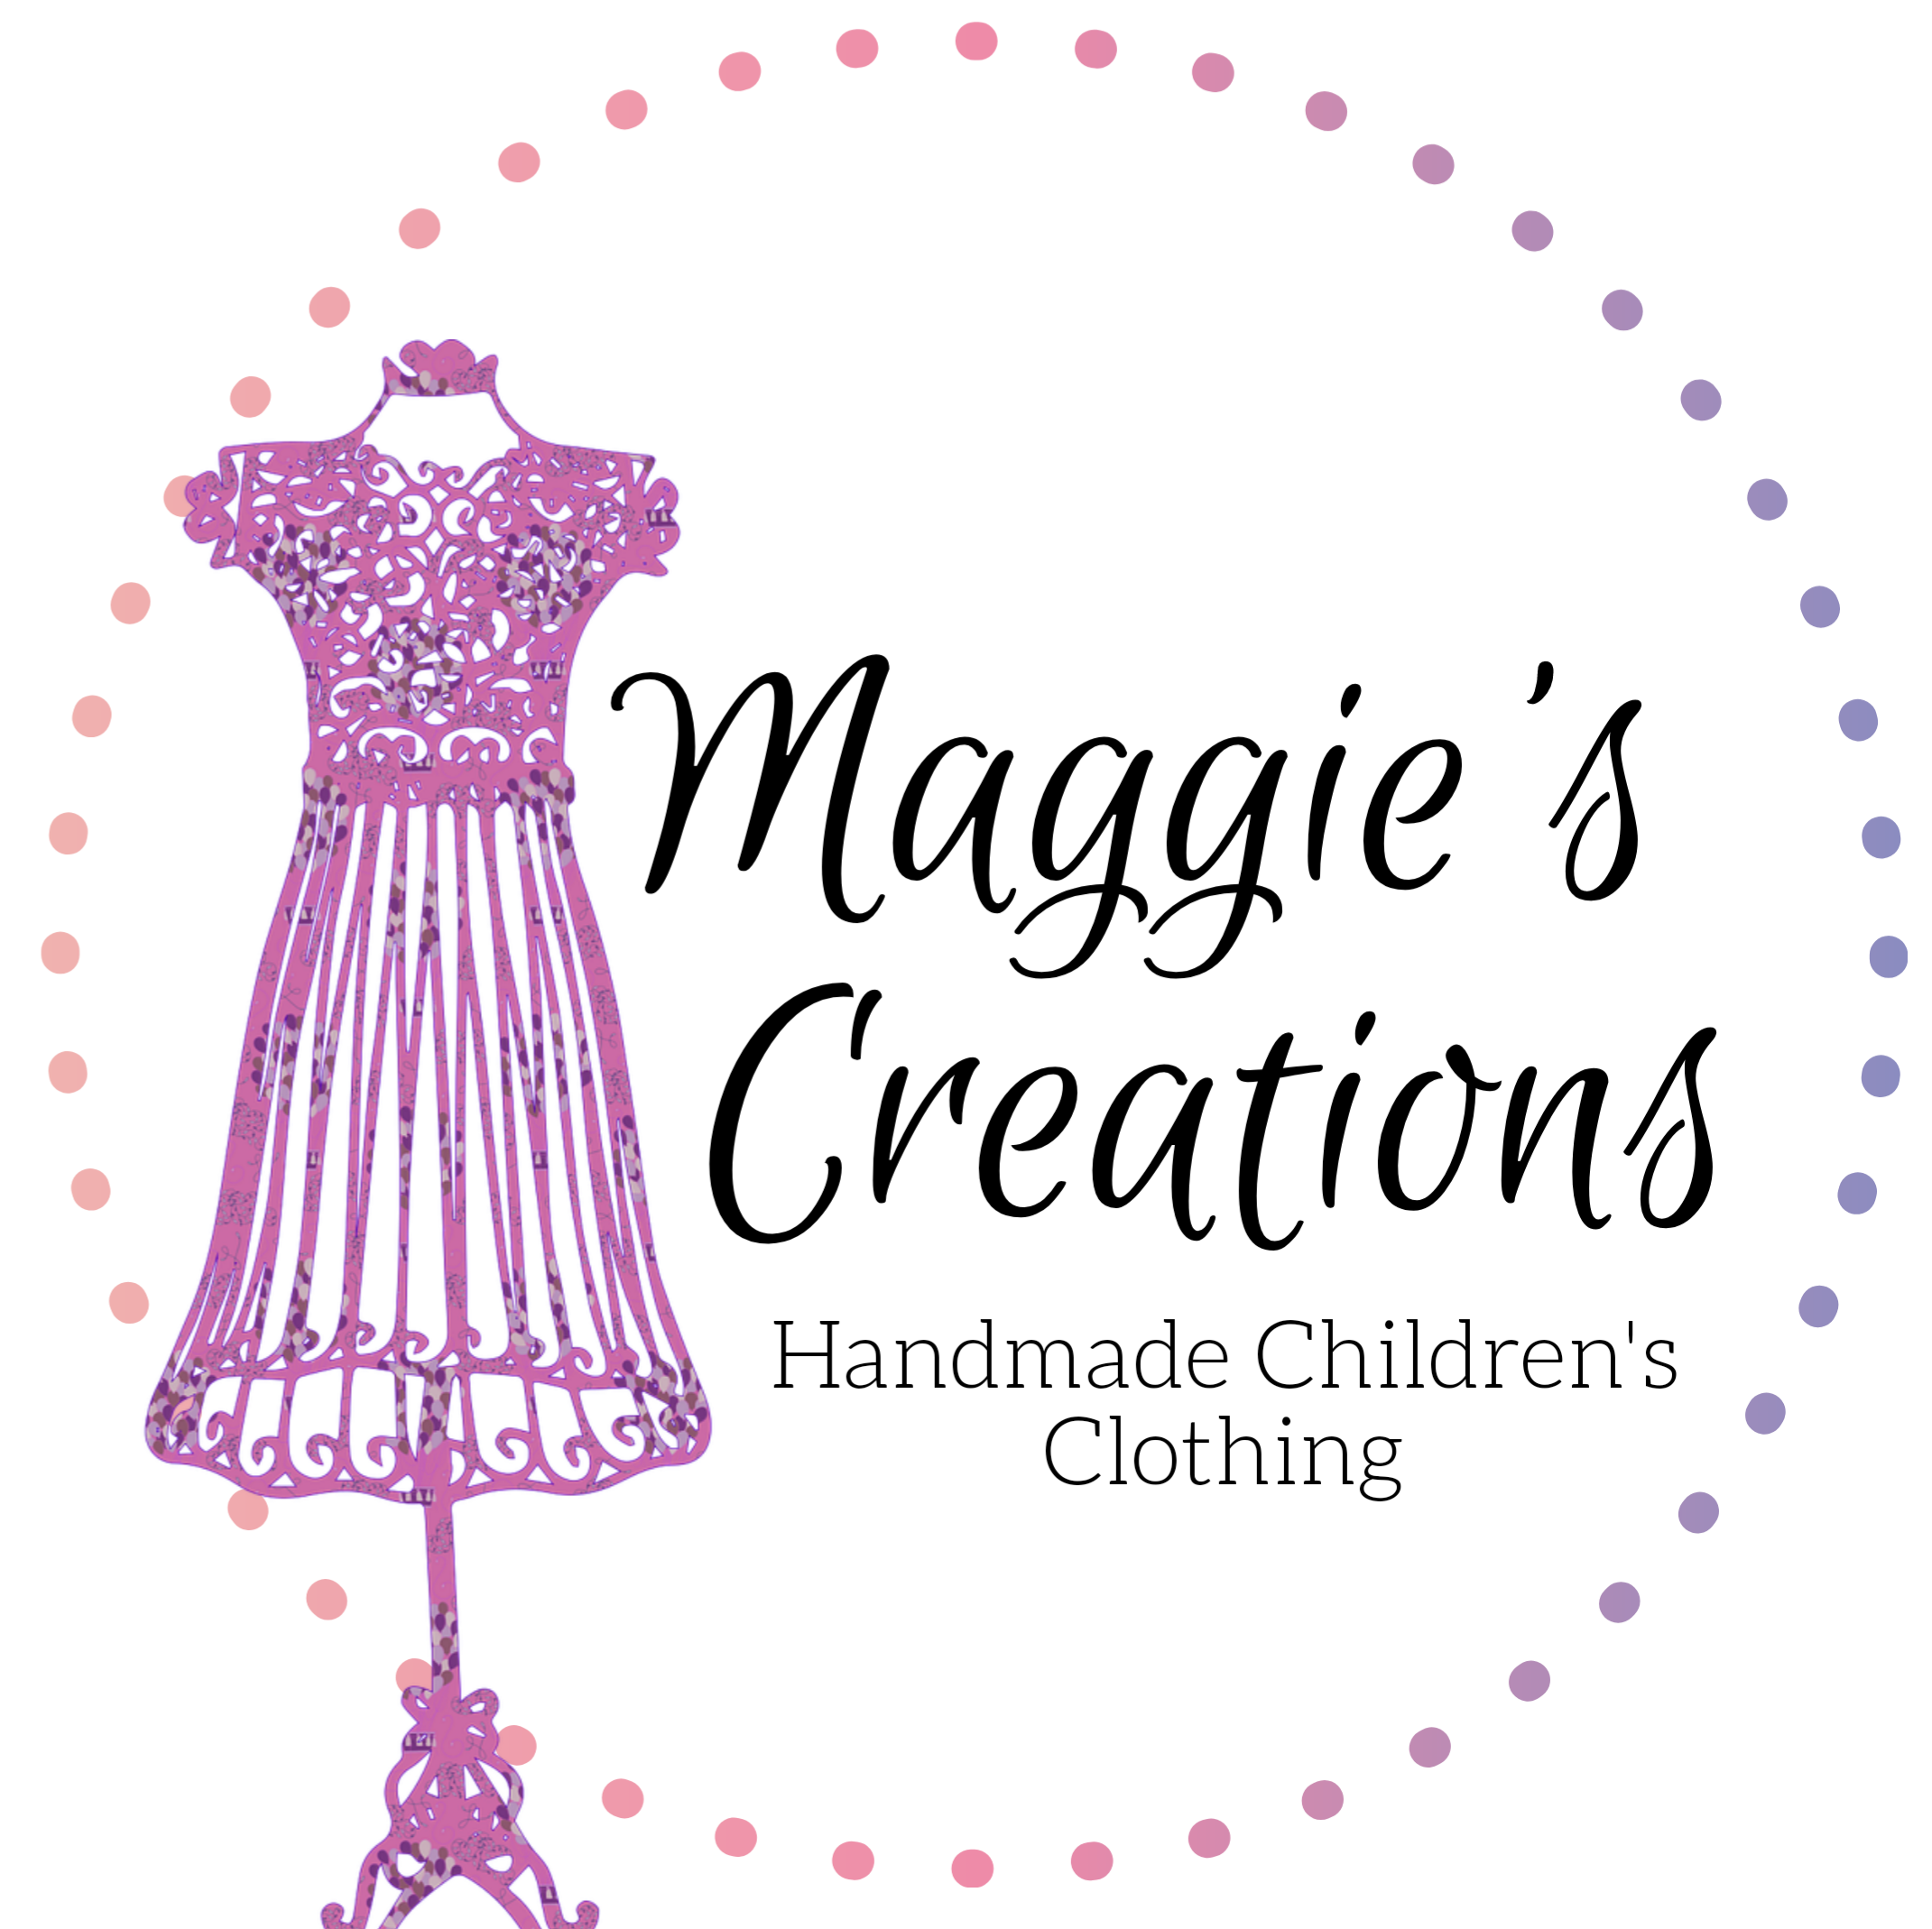 Handmade Children's Clothing | Maggie's Creations